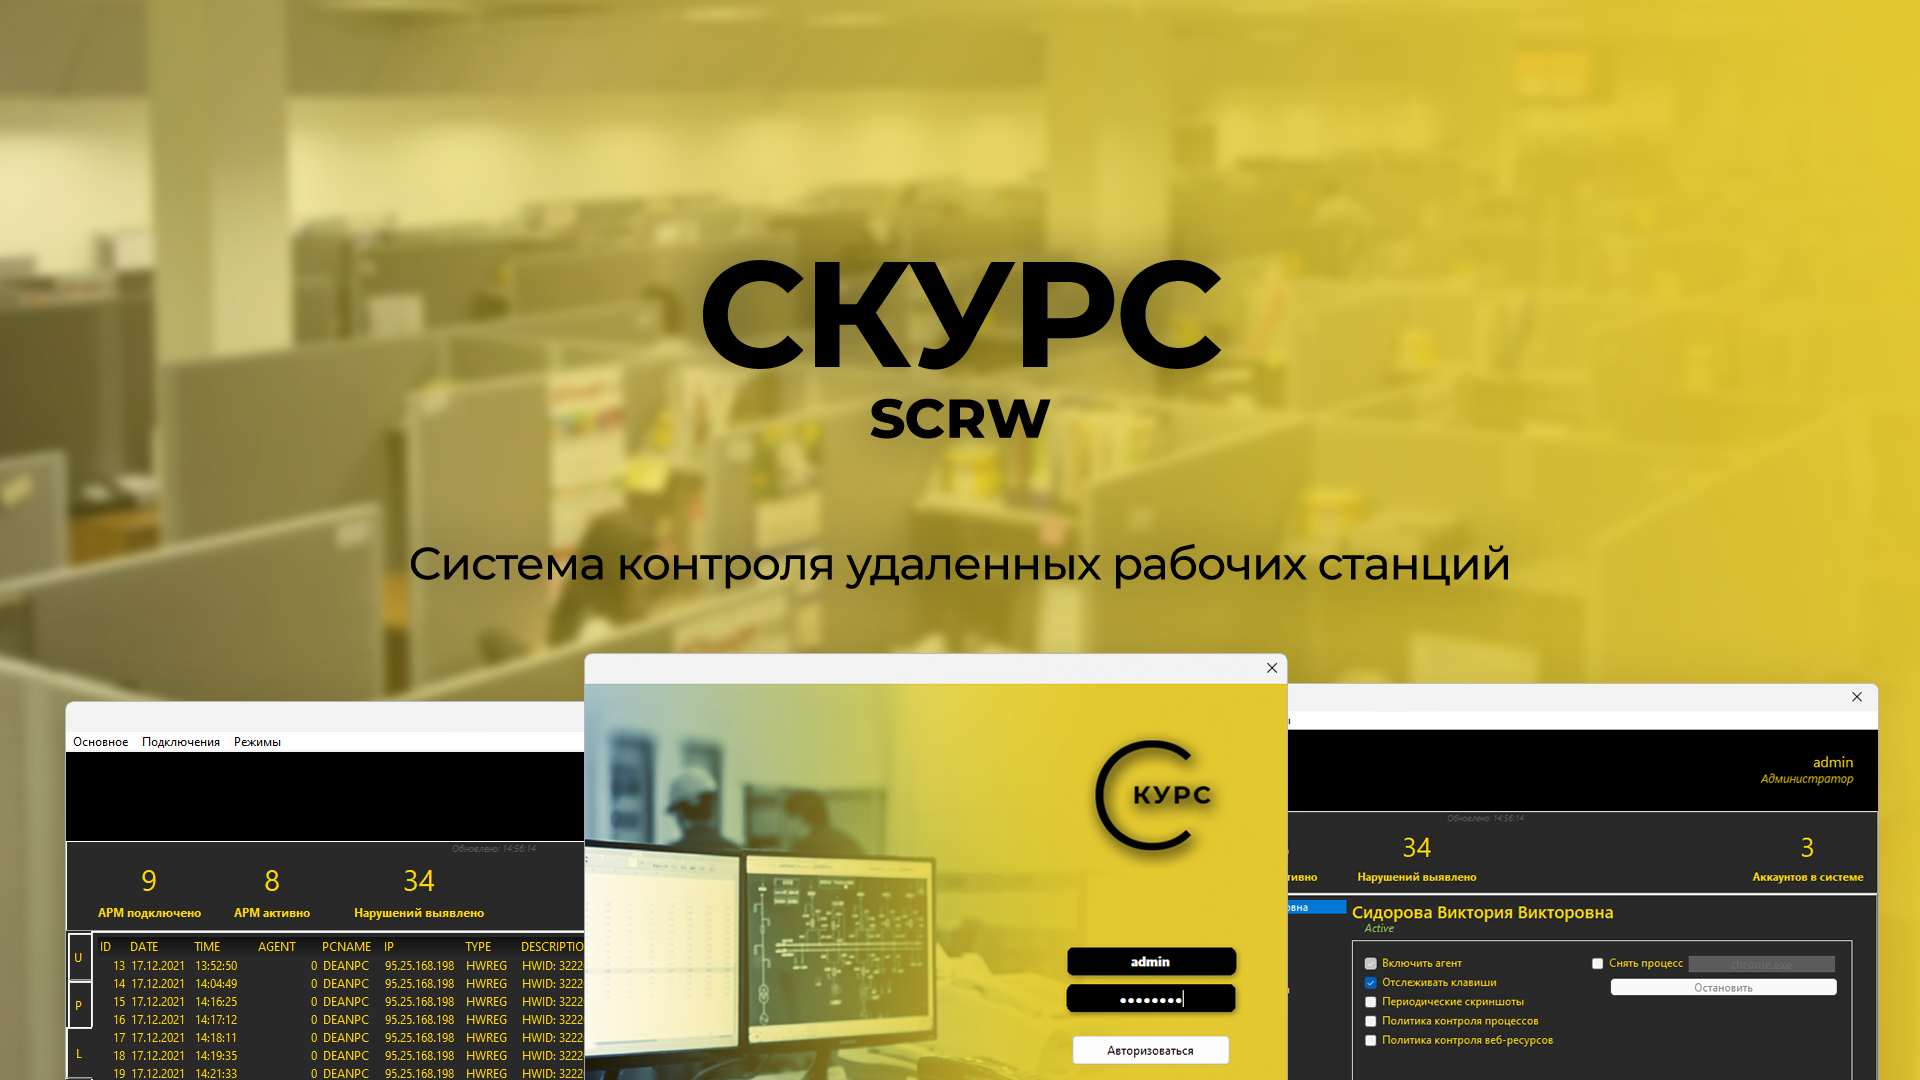 СКУРС (SCRW) — Система контроля удаленных рабочих станций